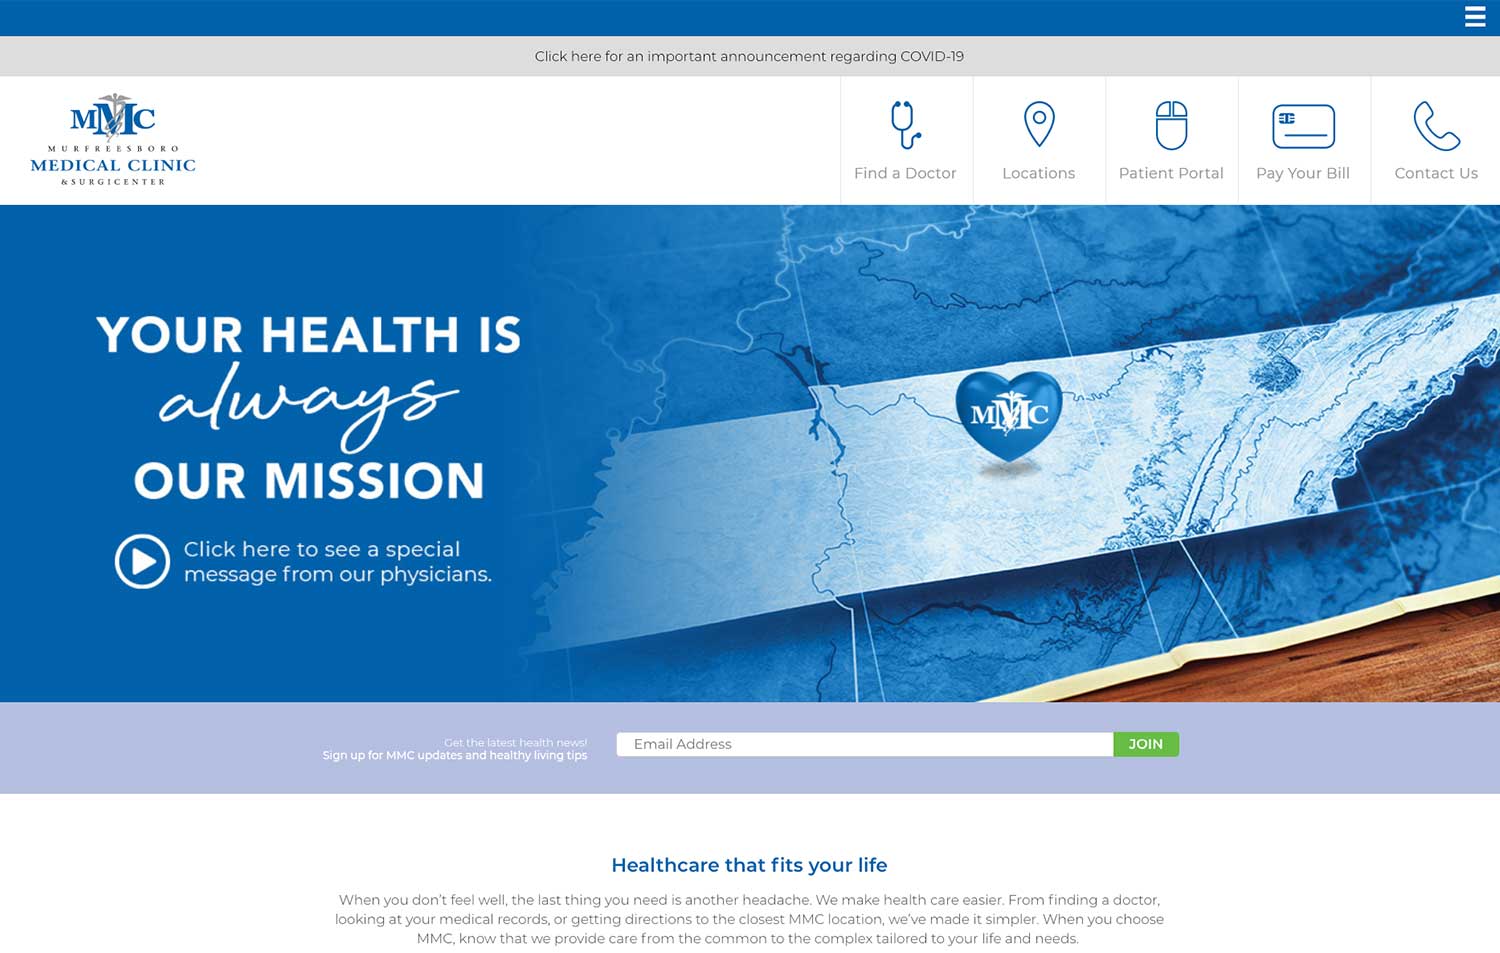 Vanguard Direct Family Medicine - Navigation Advertising - Healthcare - Web